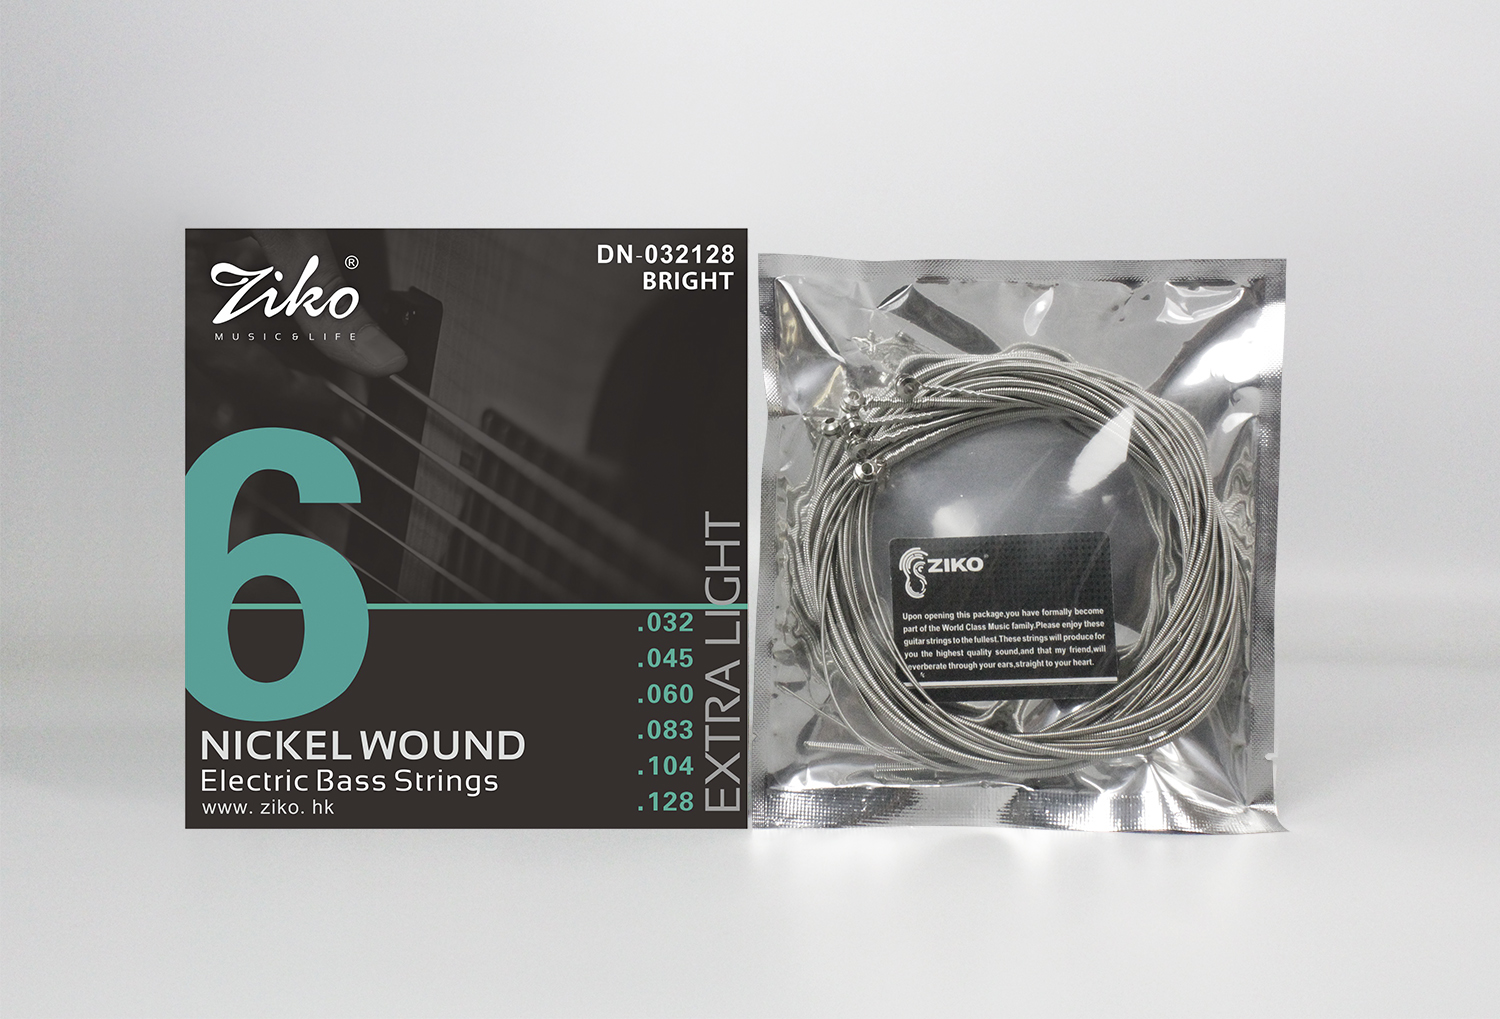 Ziko 6 bass strings DN-045-6